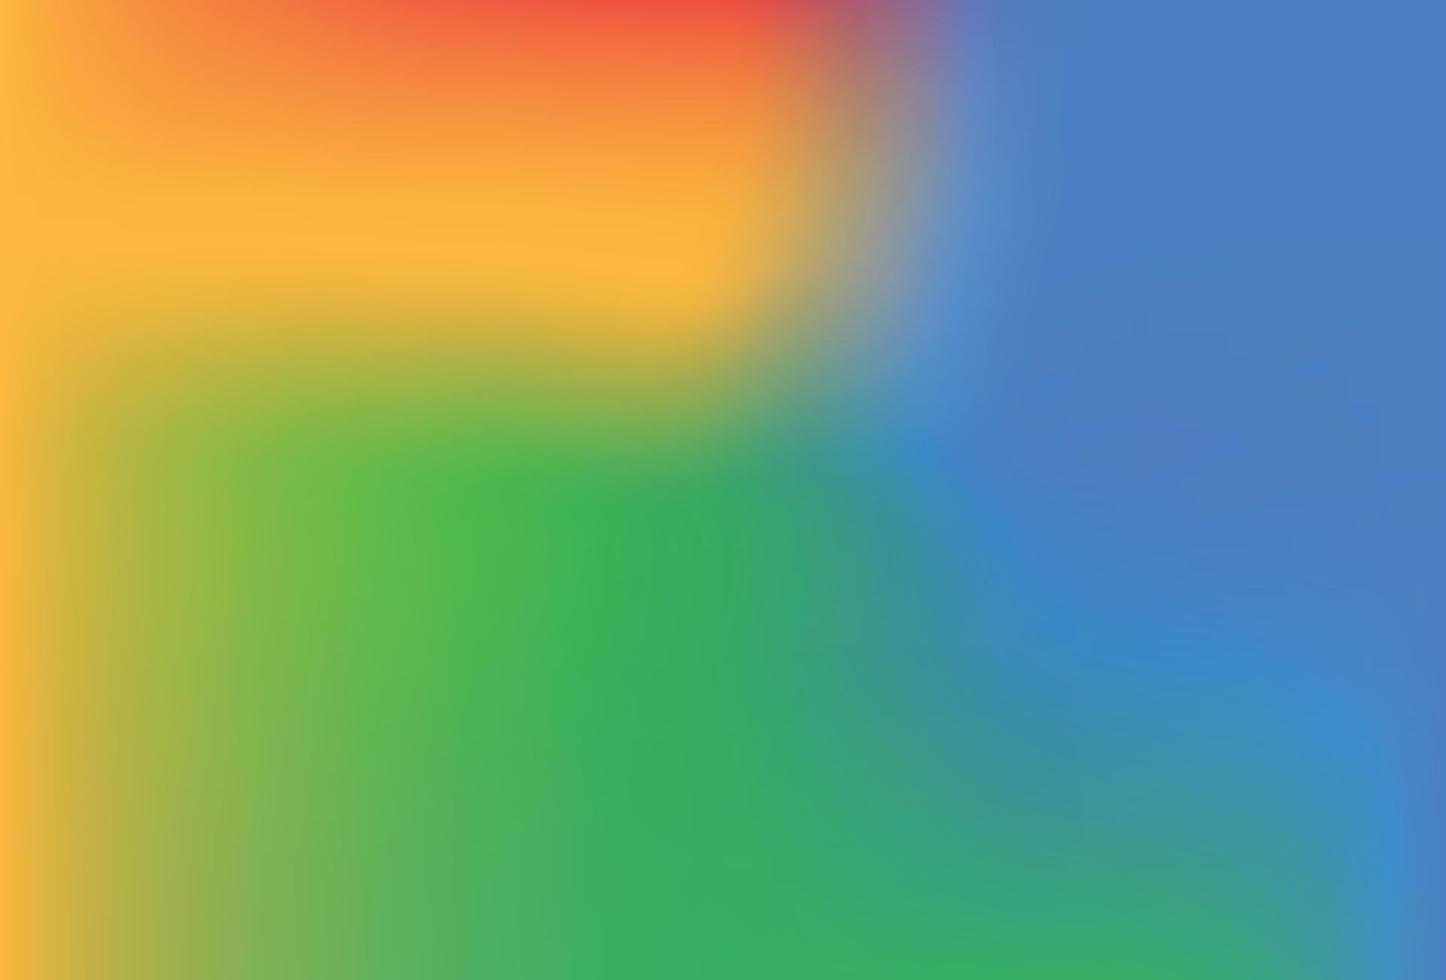 fundo de malha de gradiente colorido suave e embaçado. cores brilhantes modernas do arco-íris. modelo de banner de vetor colorido macio editável fácil